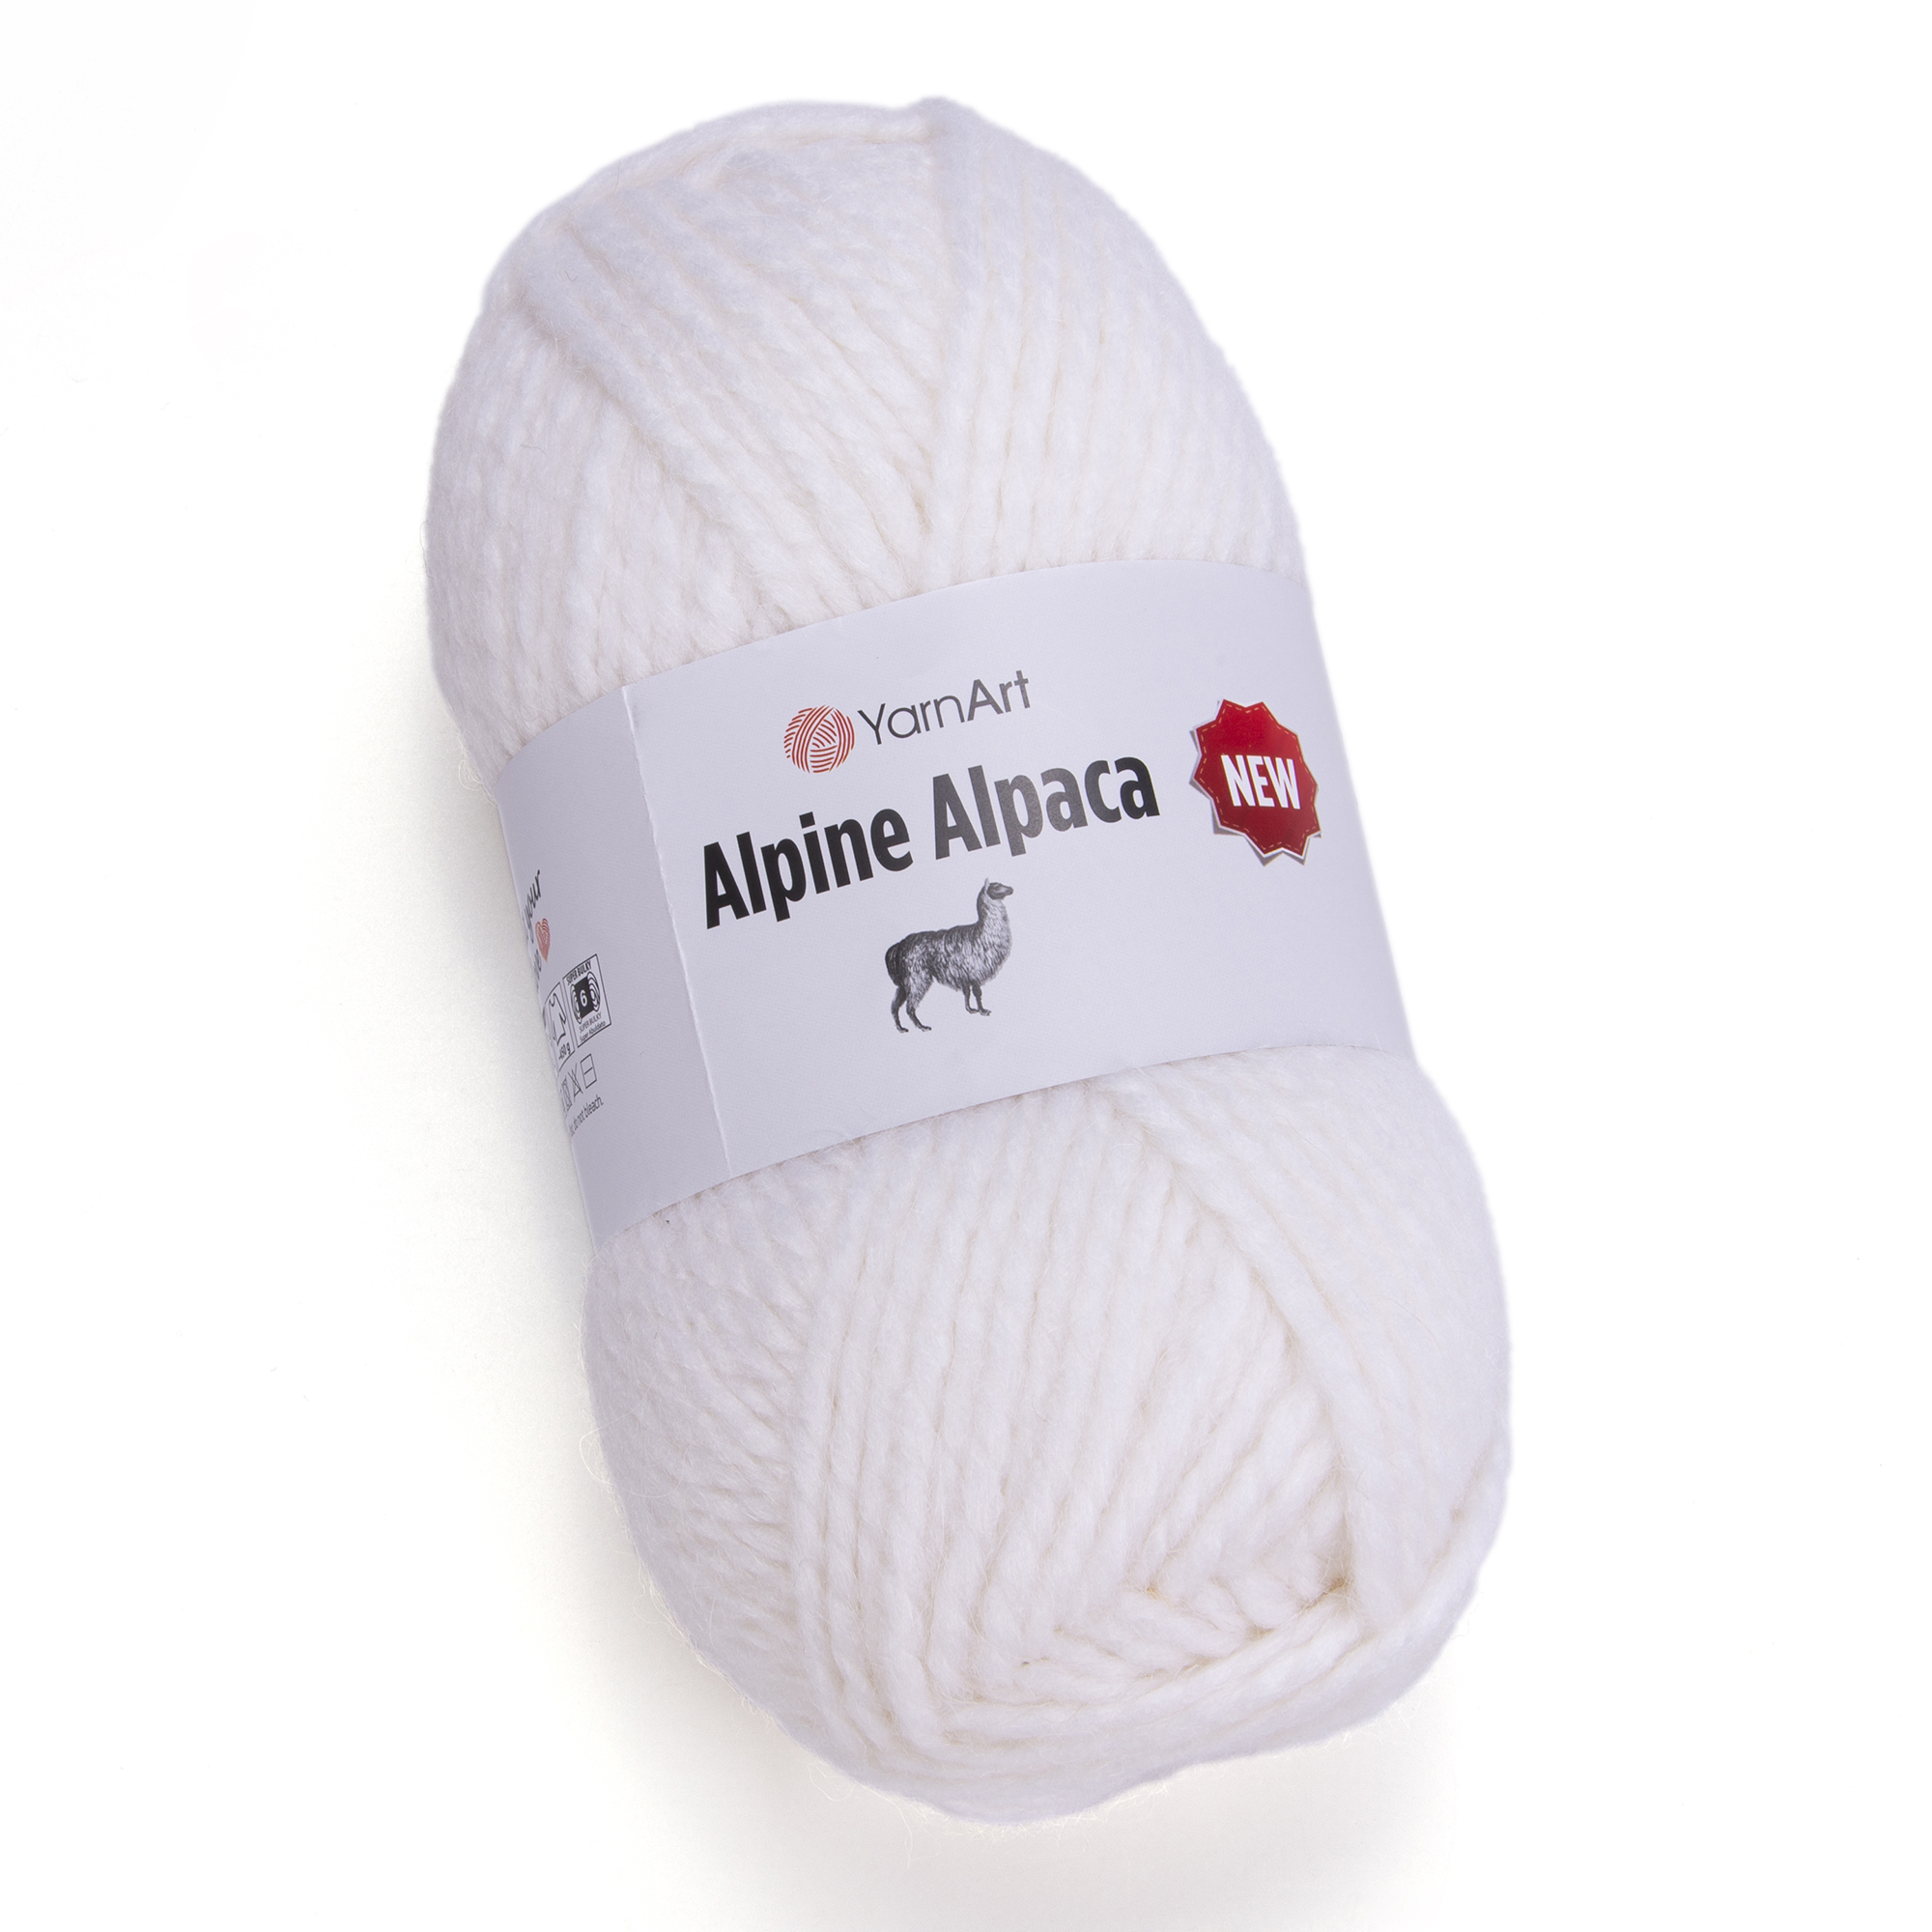 Alpine Alpaca New – 1440